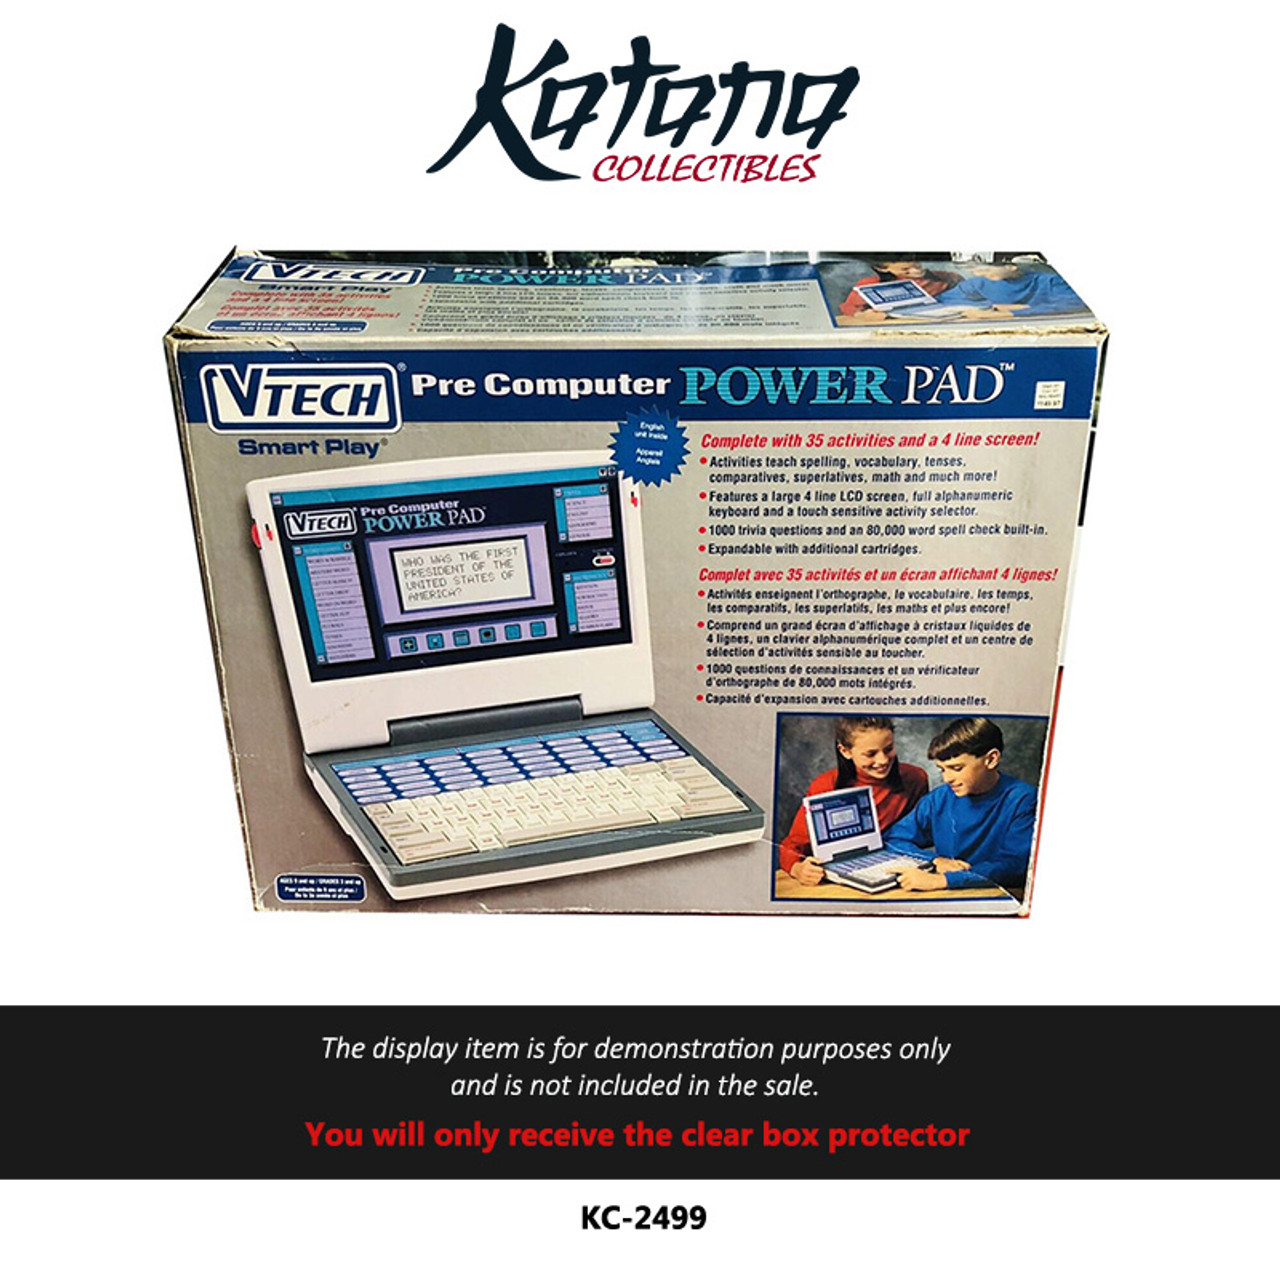 Katana Collectibles Protector For VTech PreComputer PowerPad